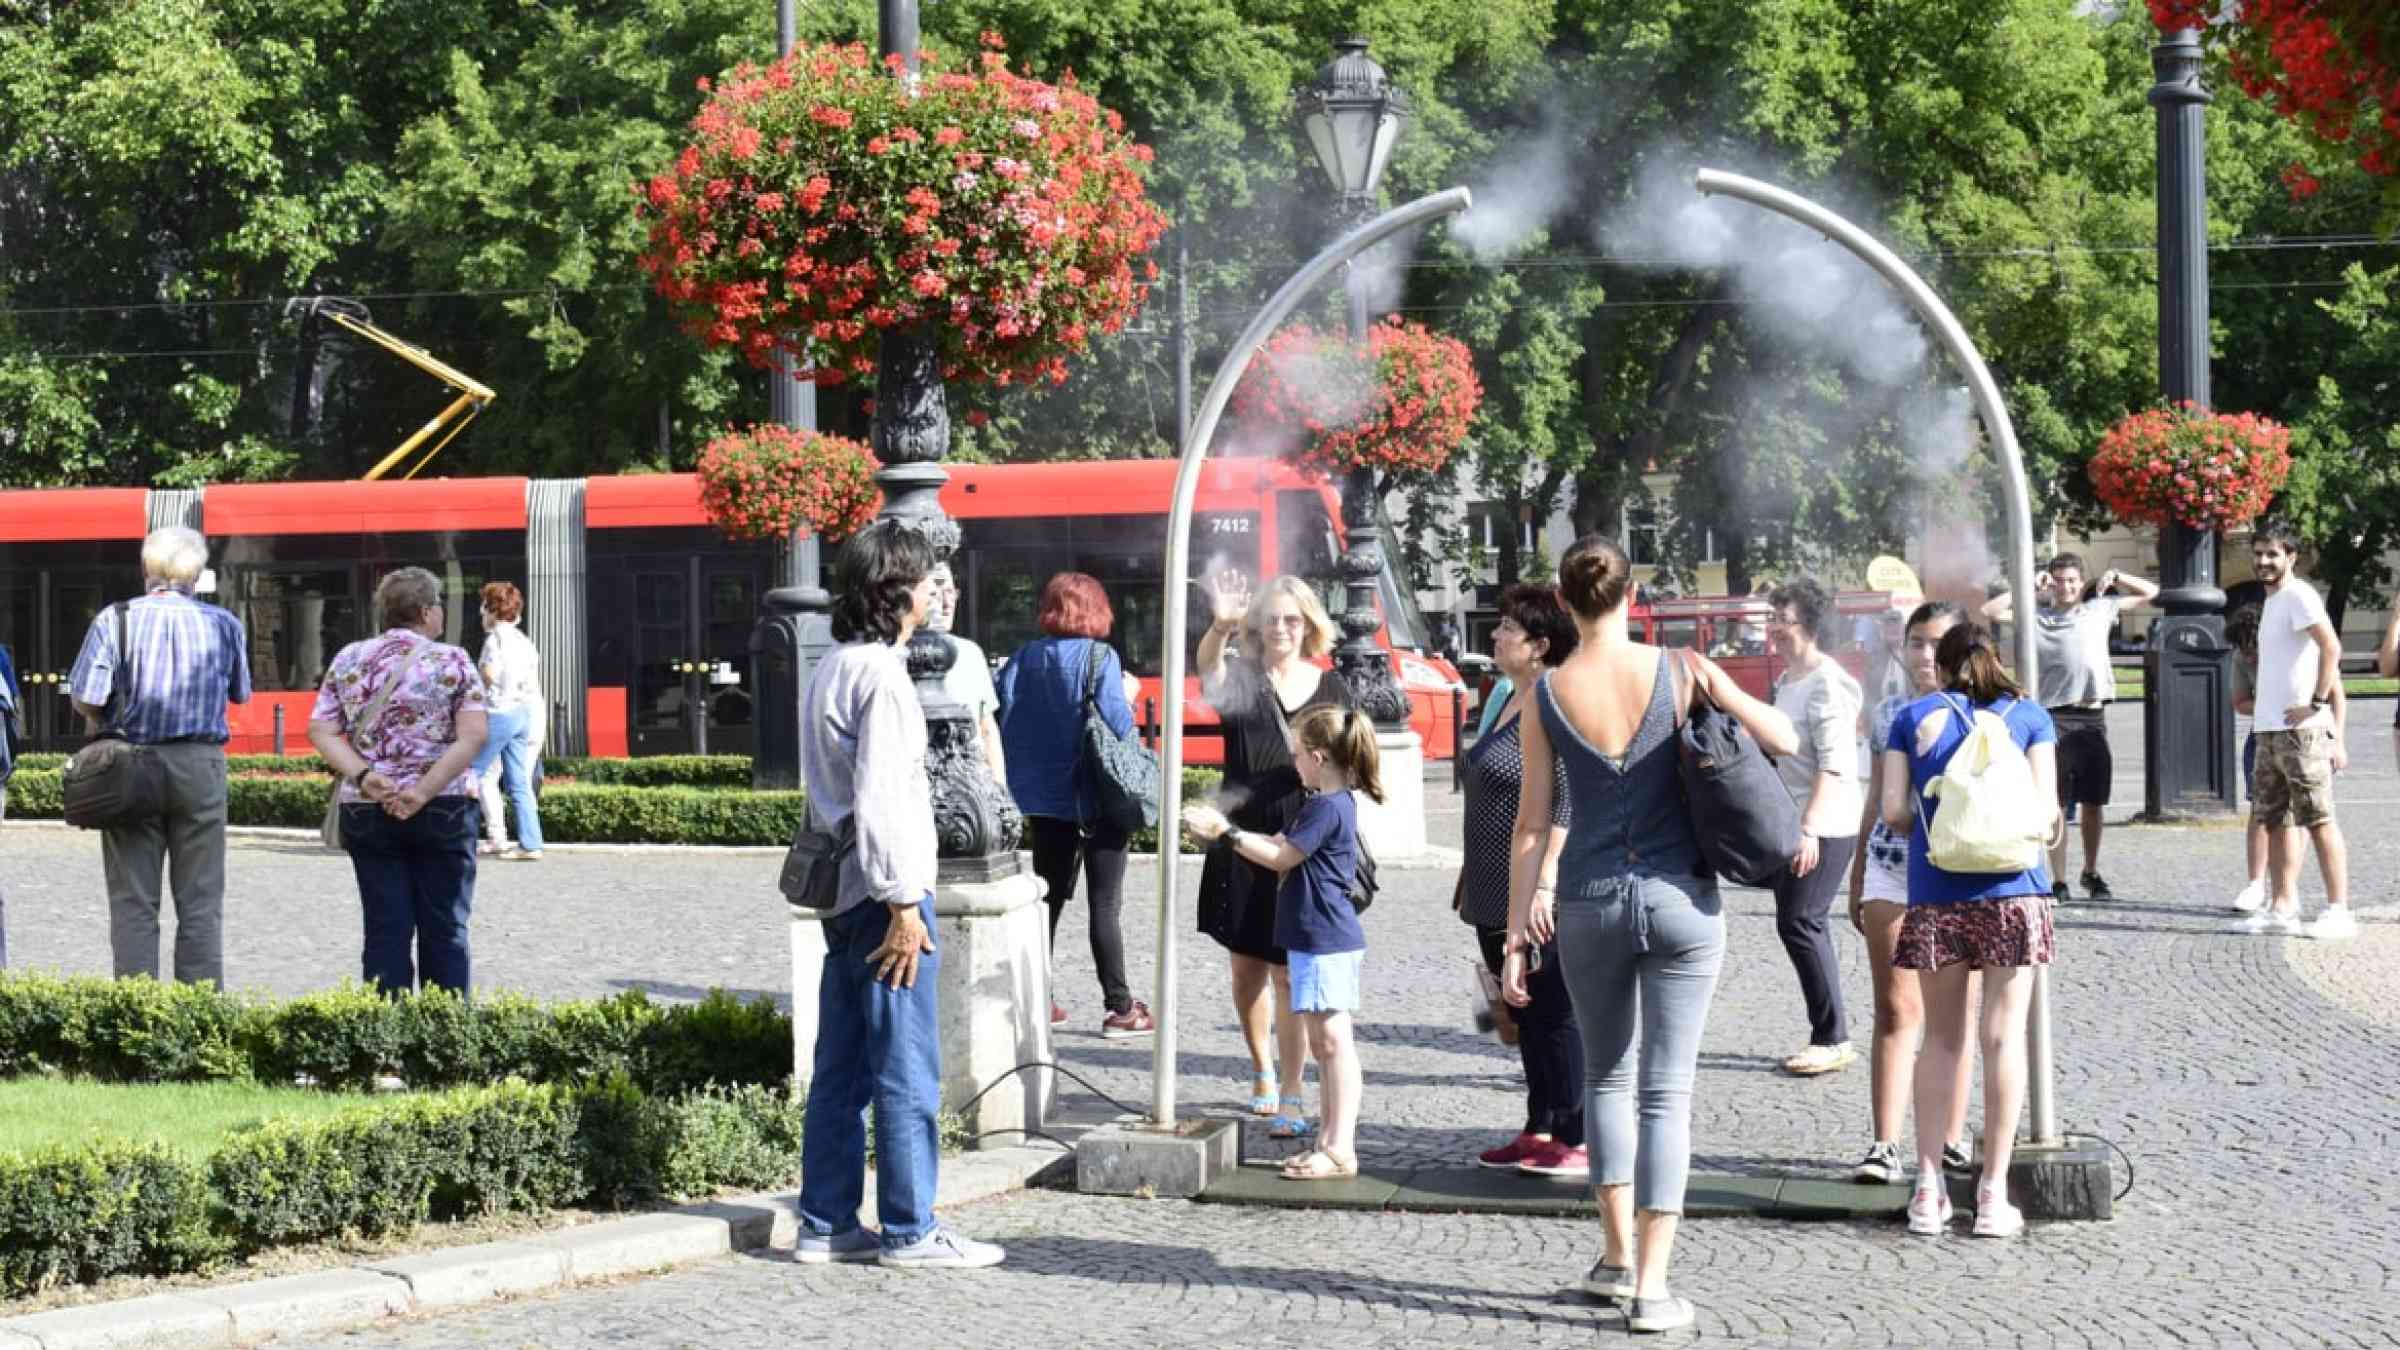 People enjoy a water spray in Bratislava, Slovakia on a summer day (2018)